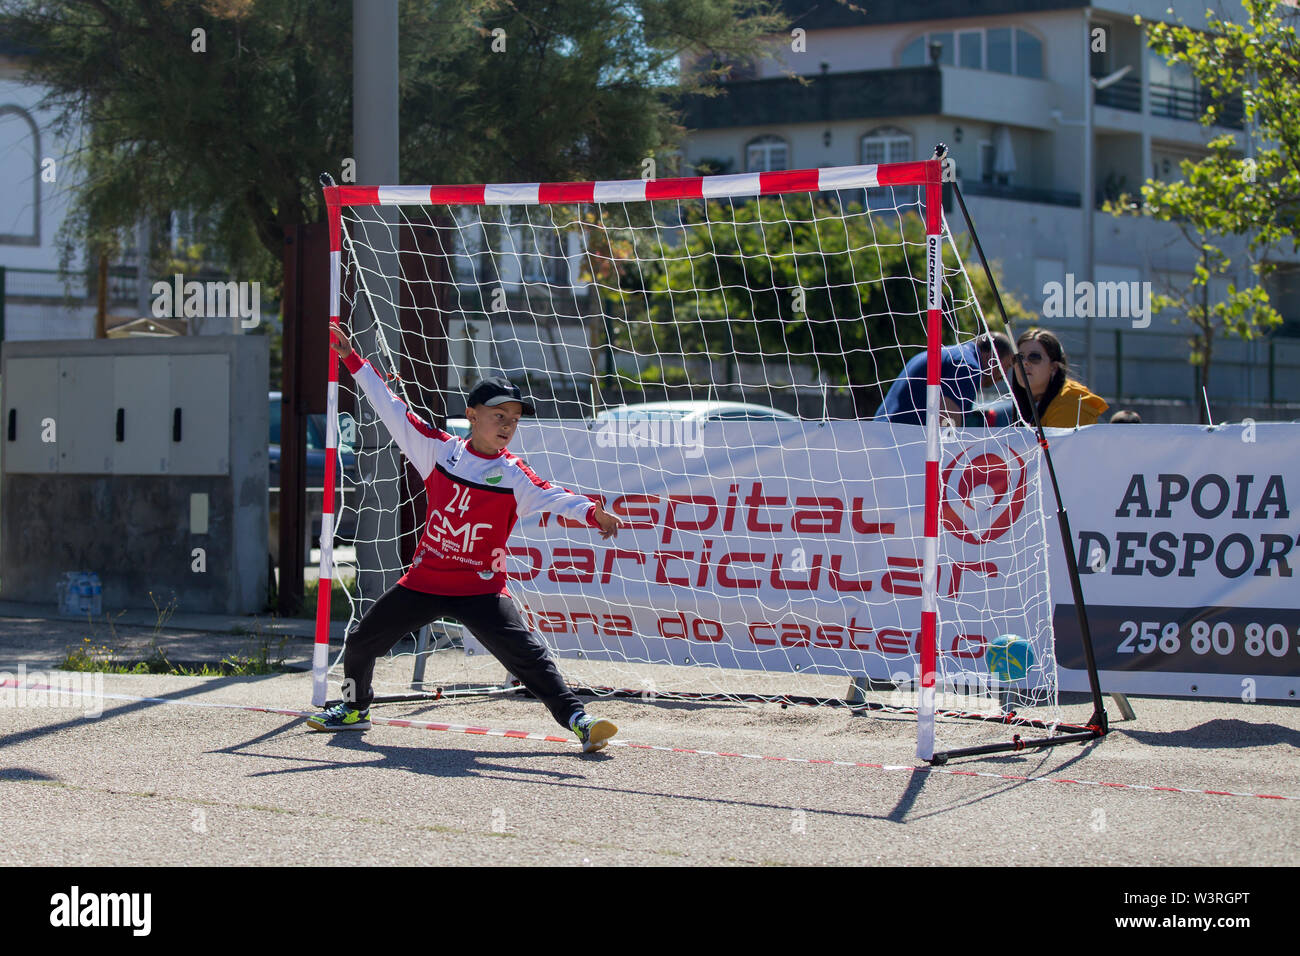 Caminha, Viana do Castelo, Portugal - June 10, 2019: Children's handball tournament organized by the Afifense Sports Association Stock Photo